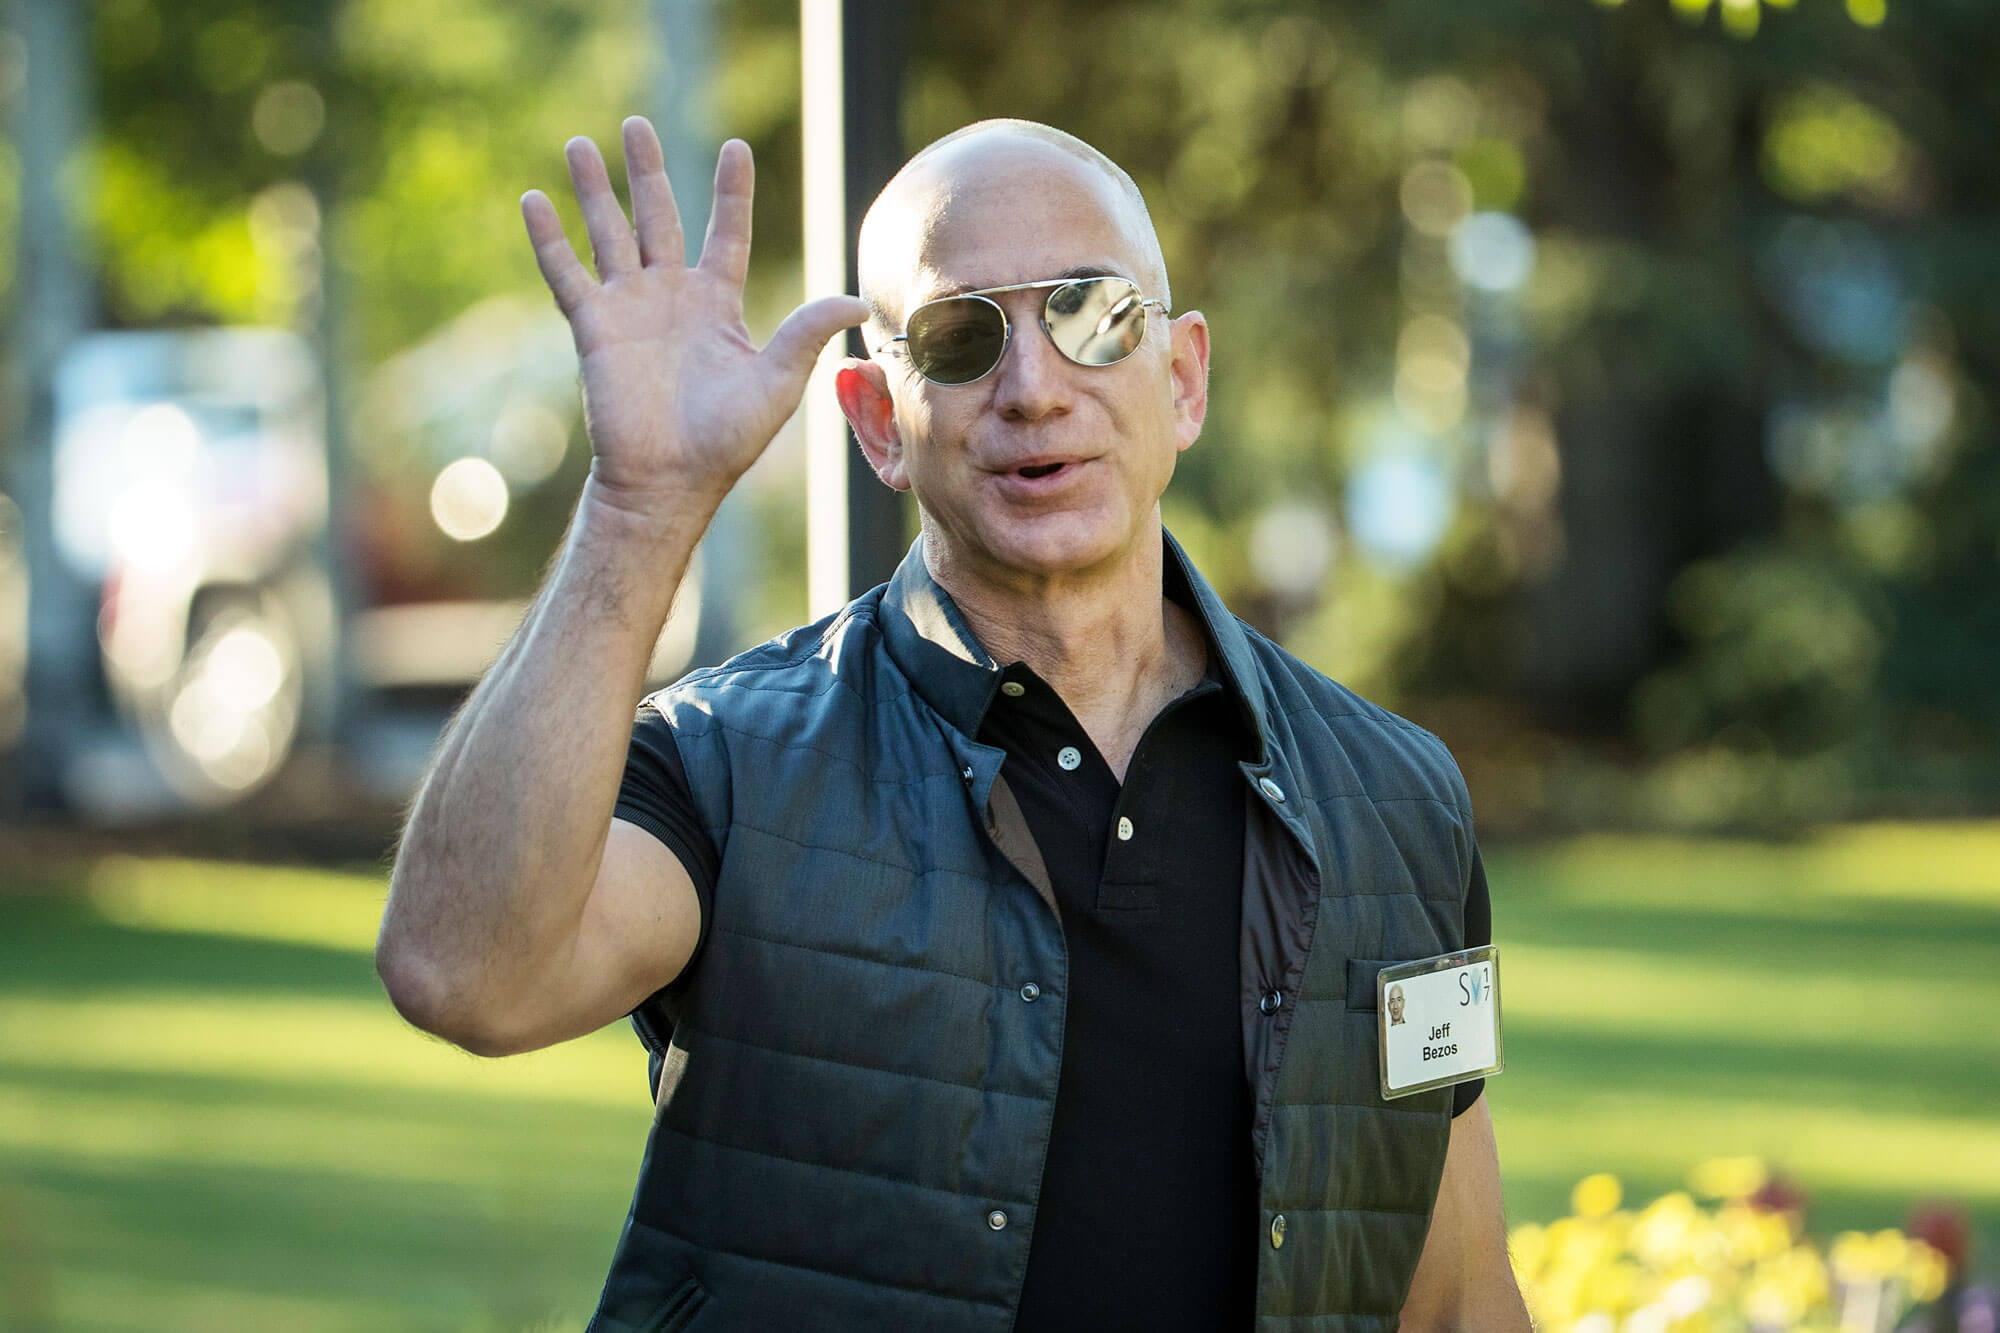 Jeff Bezos announces $2 billion fund to build preschools, help homeless families